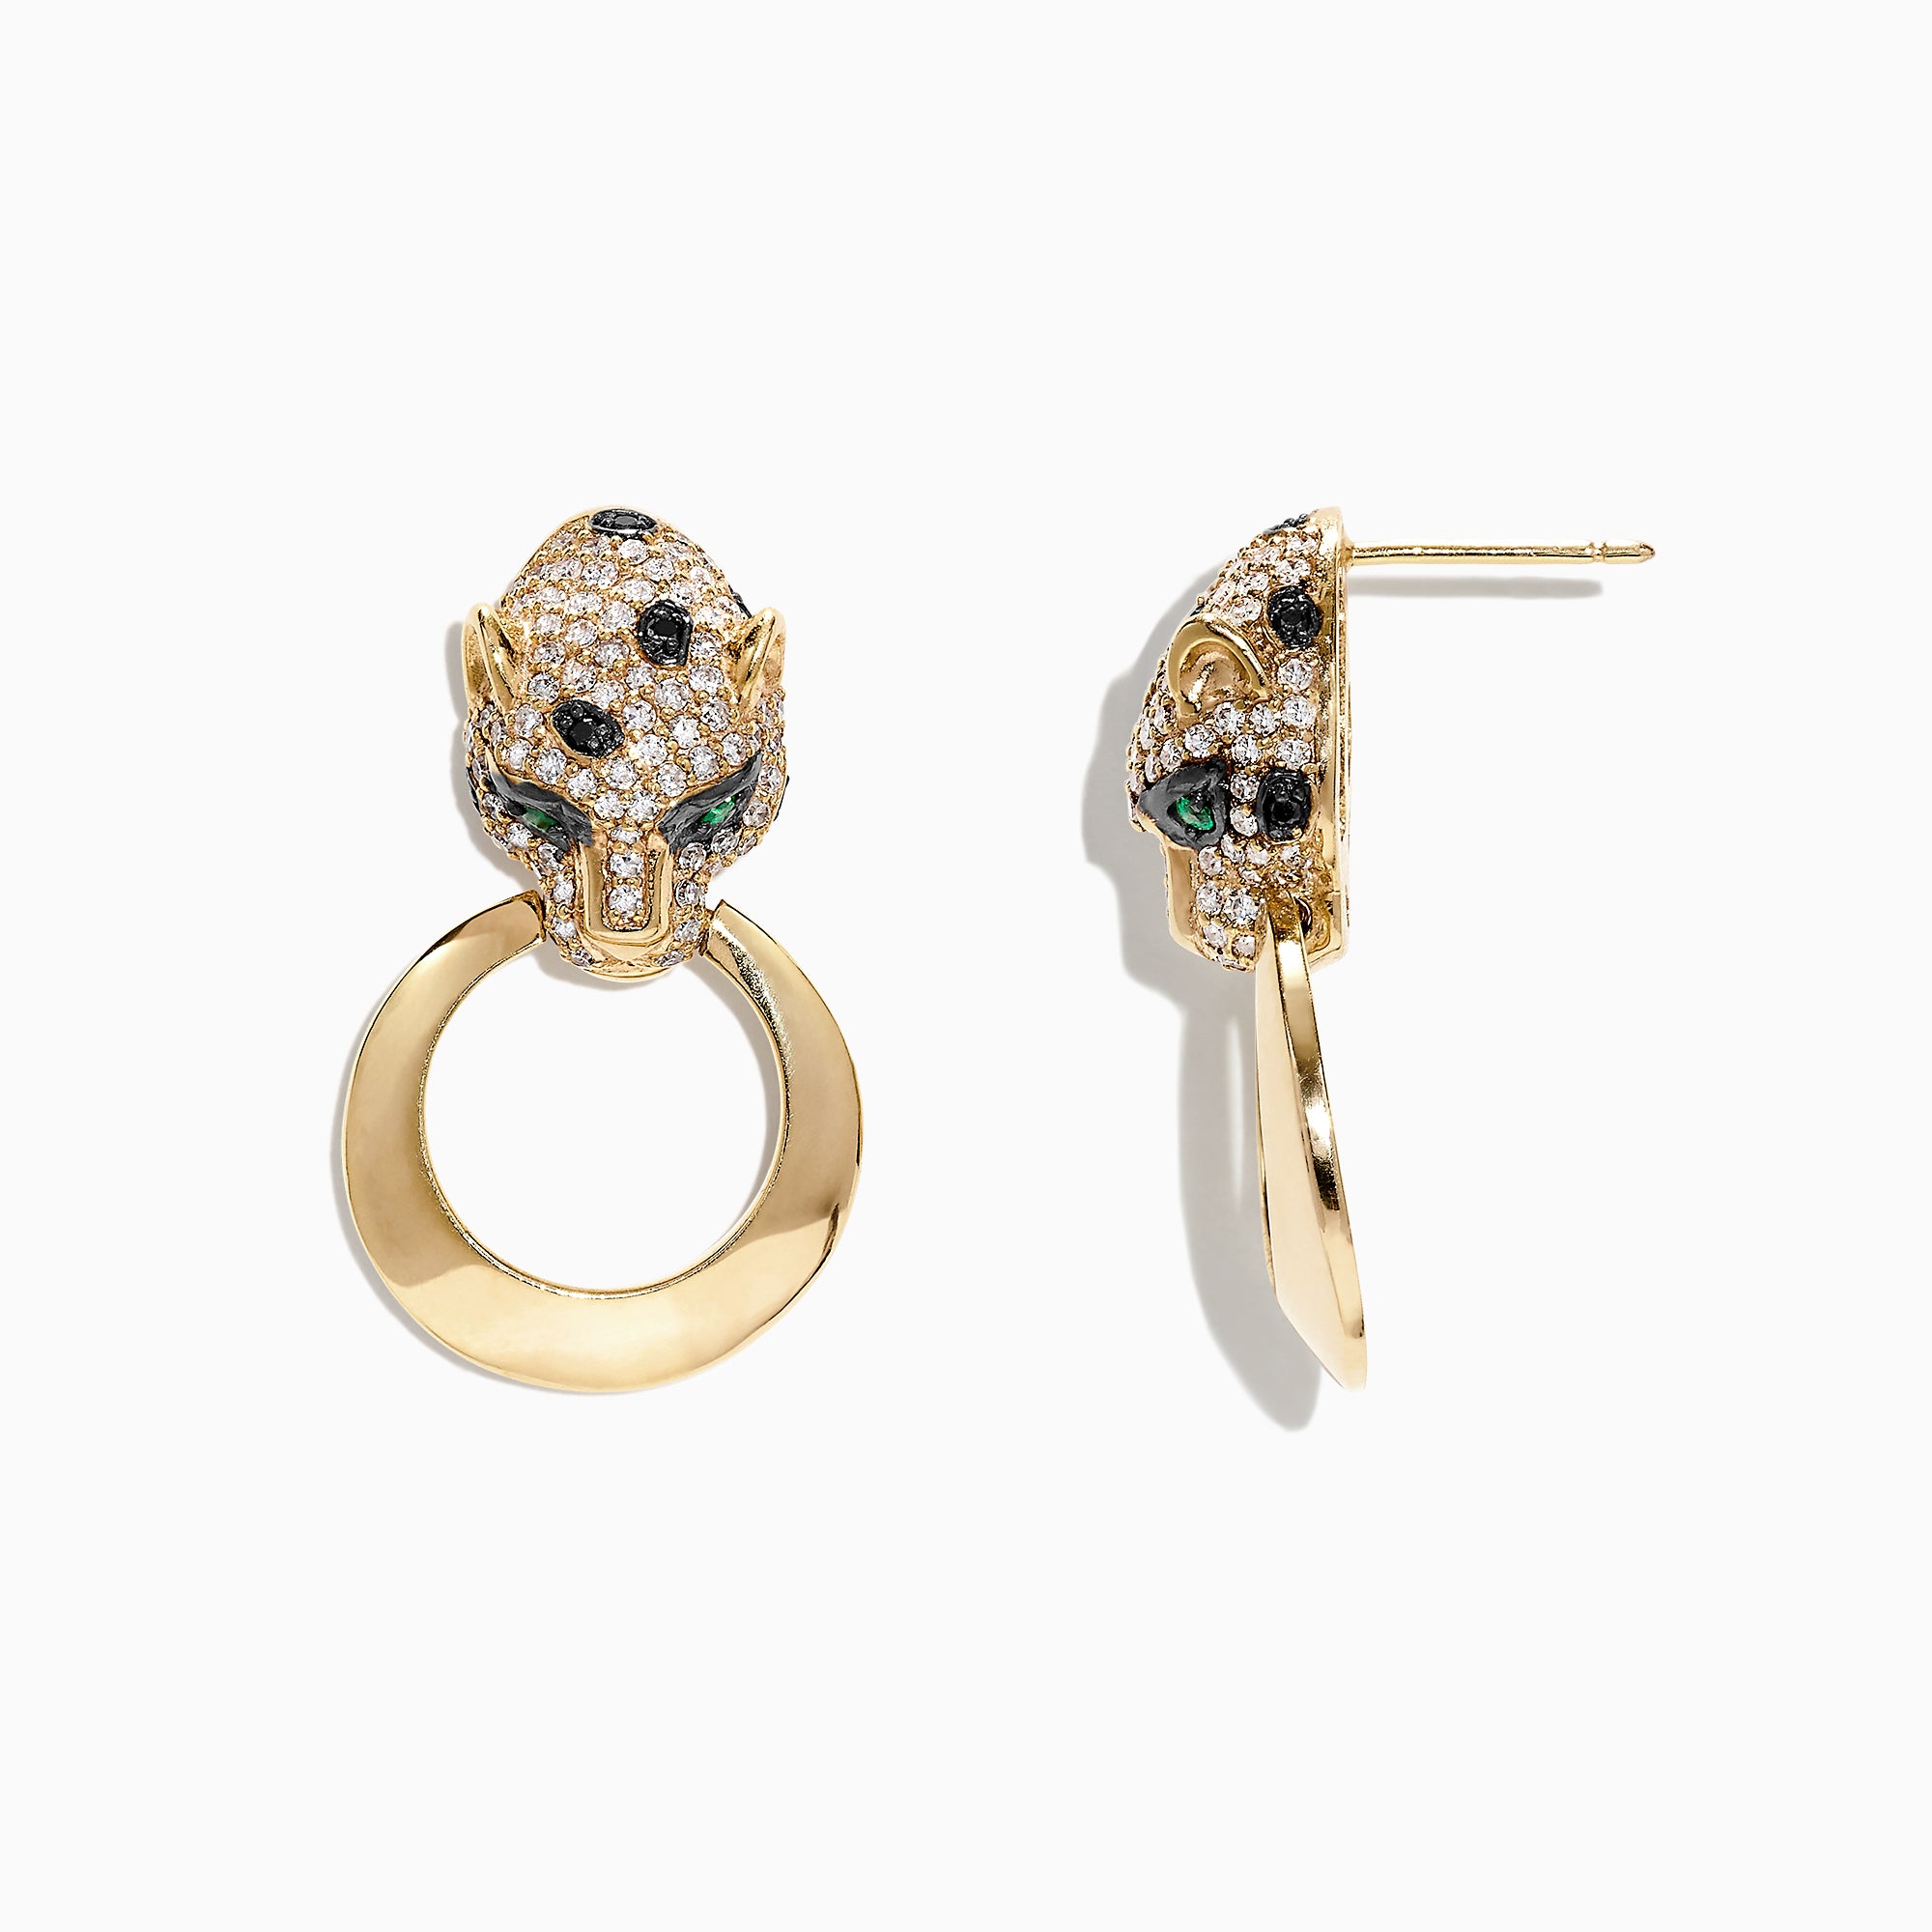 Effy Signature 14K Yellow Gold Diamond Emerald Panther Earrings, 0.93 TCW